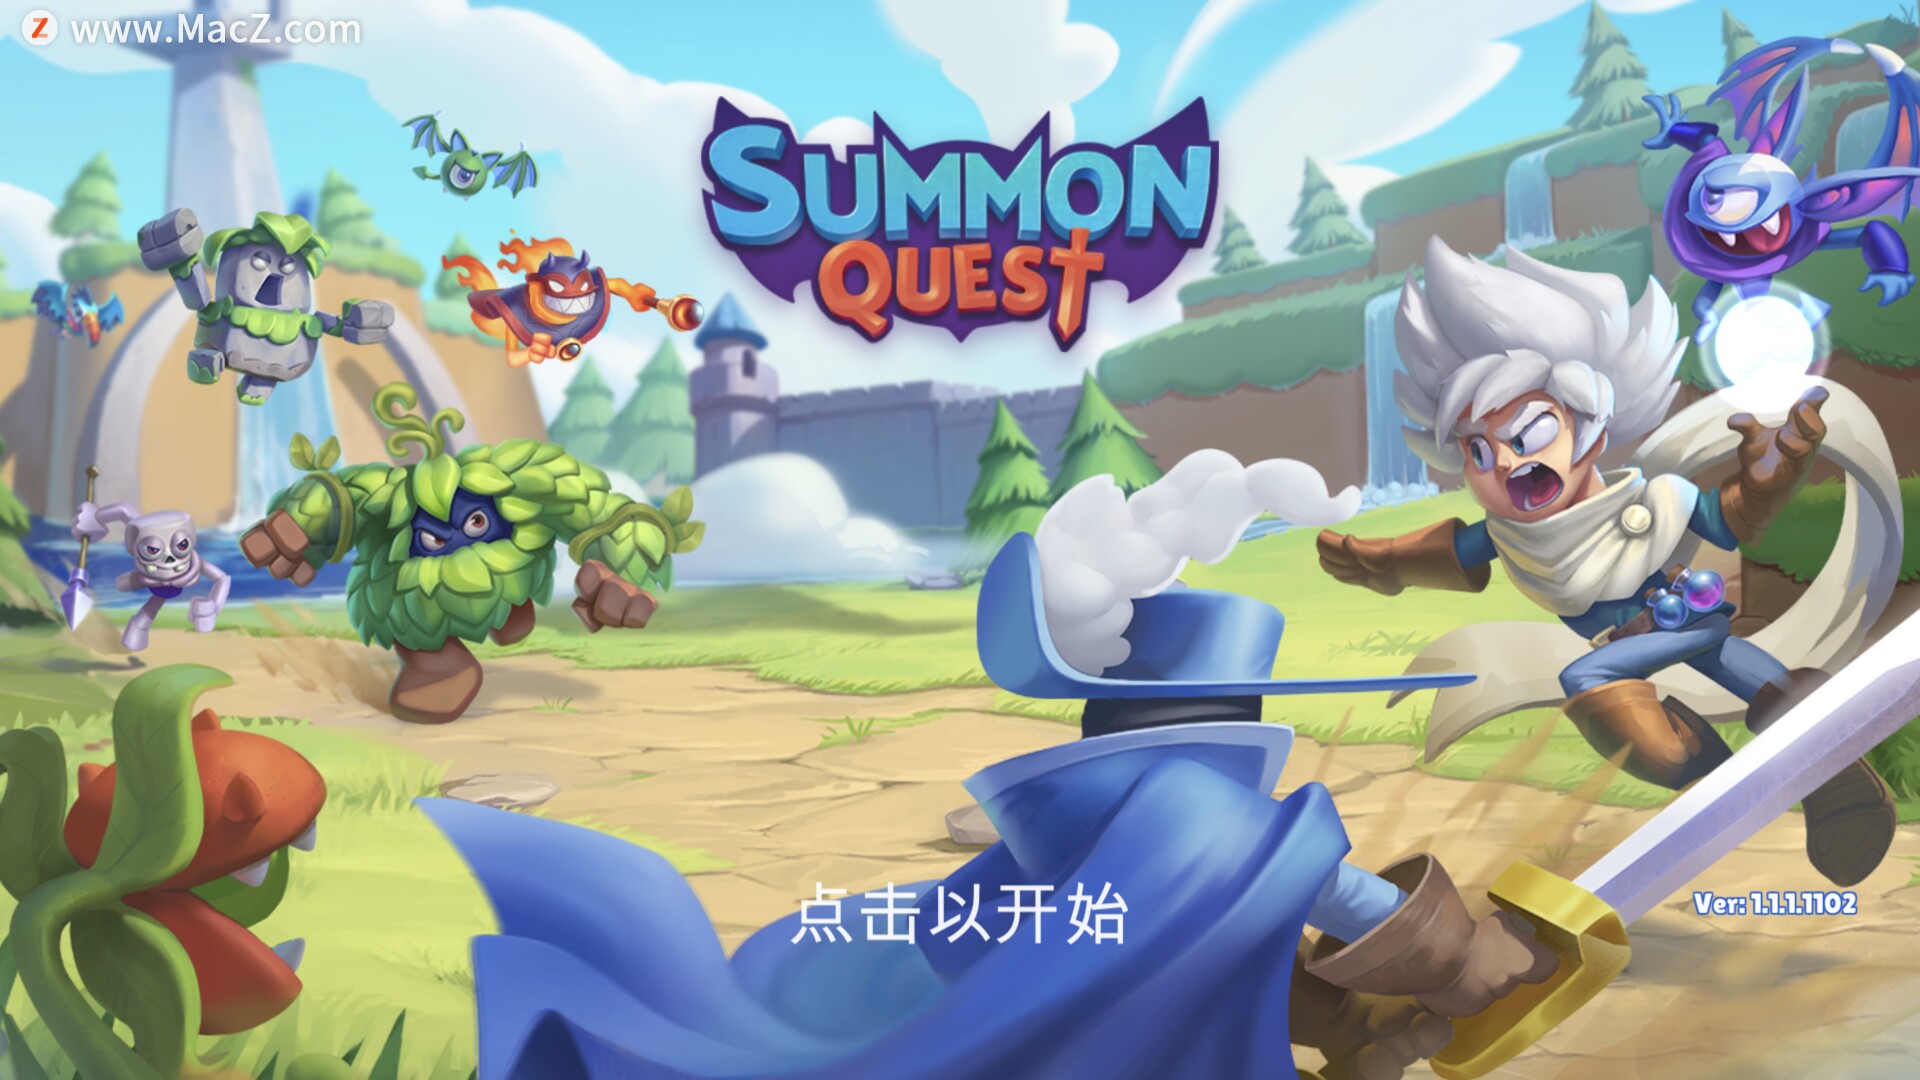 勇士召唤Summon Quest for mac(动作冒险游戏) 581.74 MB 简体中文